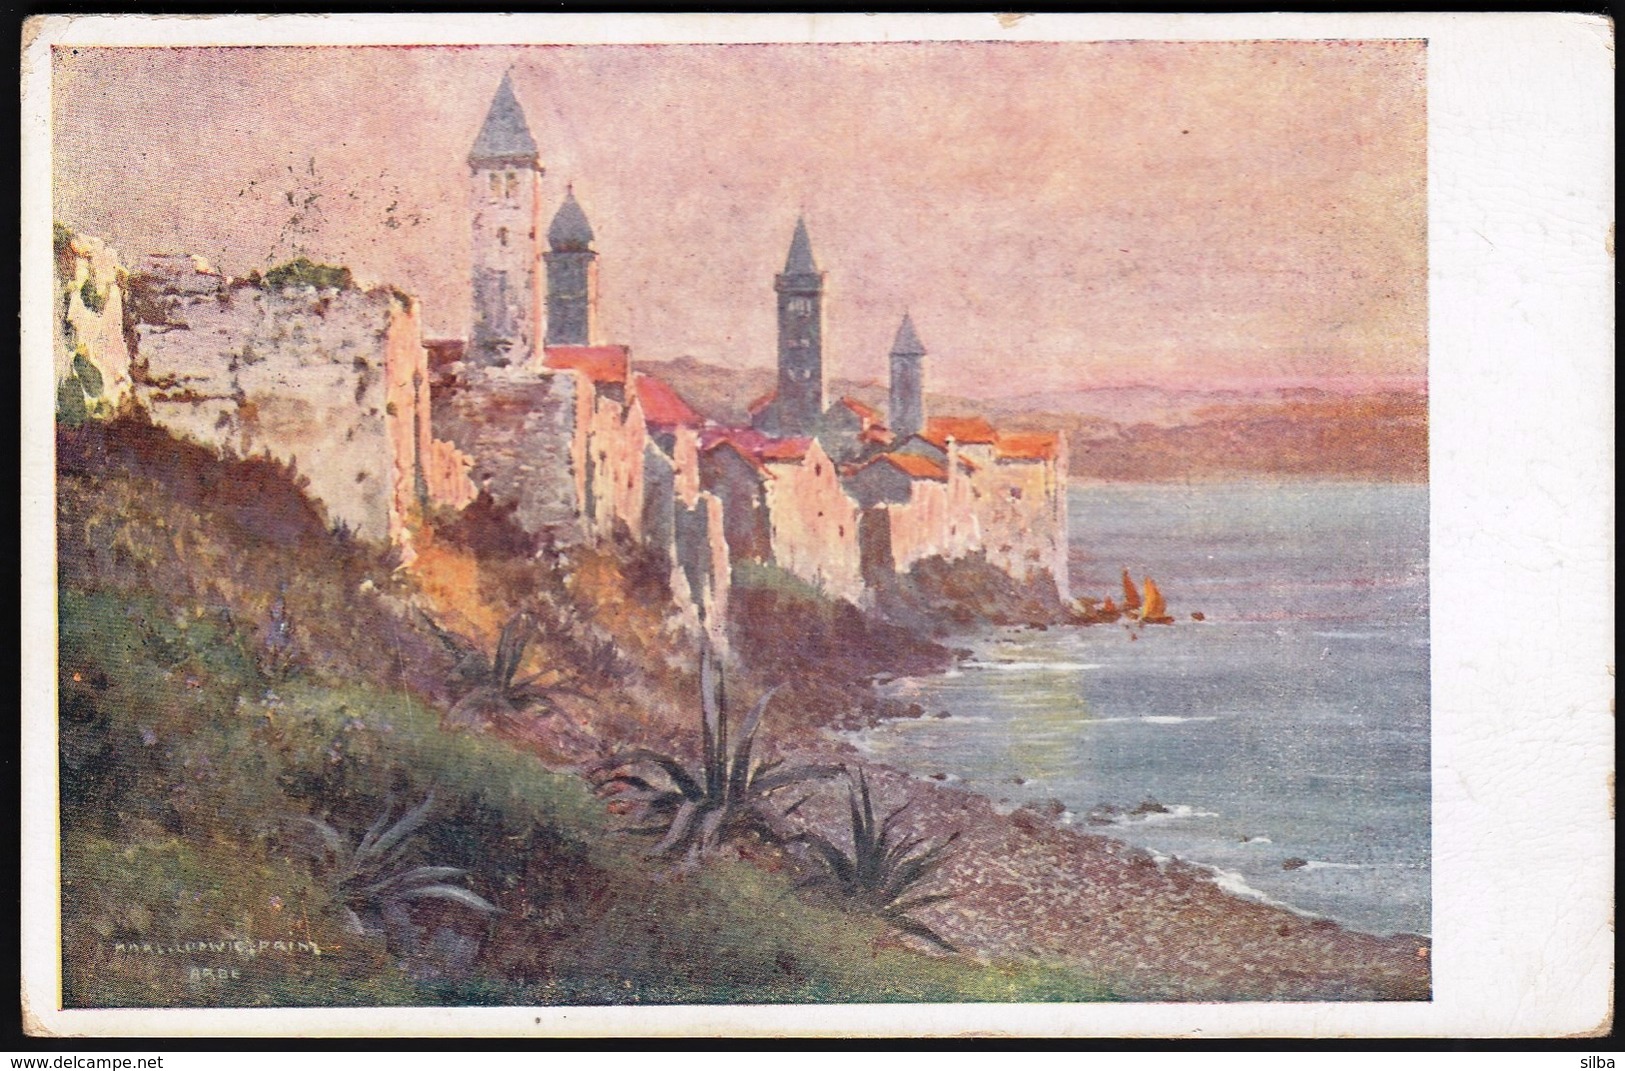 Croatia Rab, Arbe 1914 / Panorama, Obala, Church, Agave / Painting, Art / Karl Ludwig / Kalophot A71 - Croatia